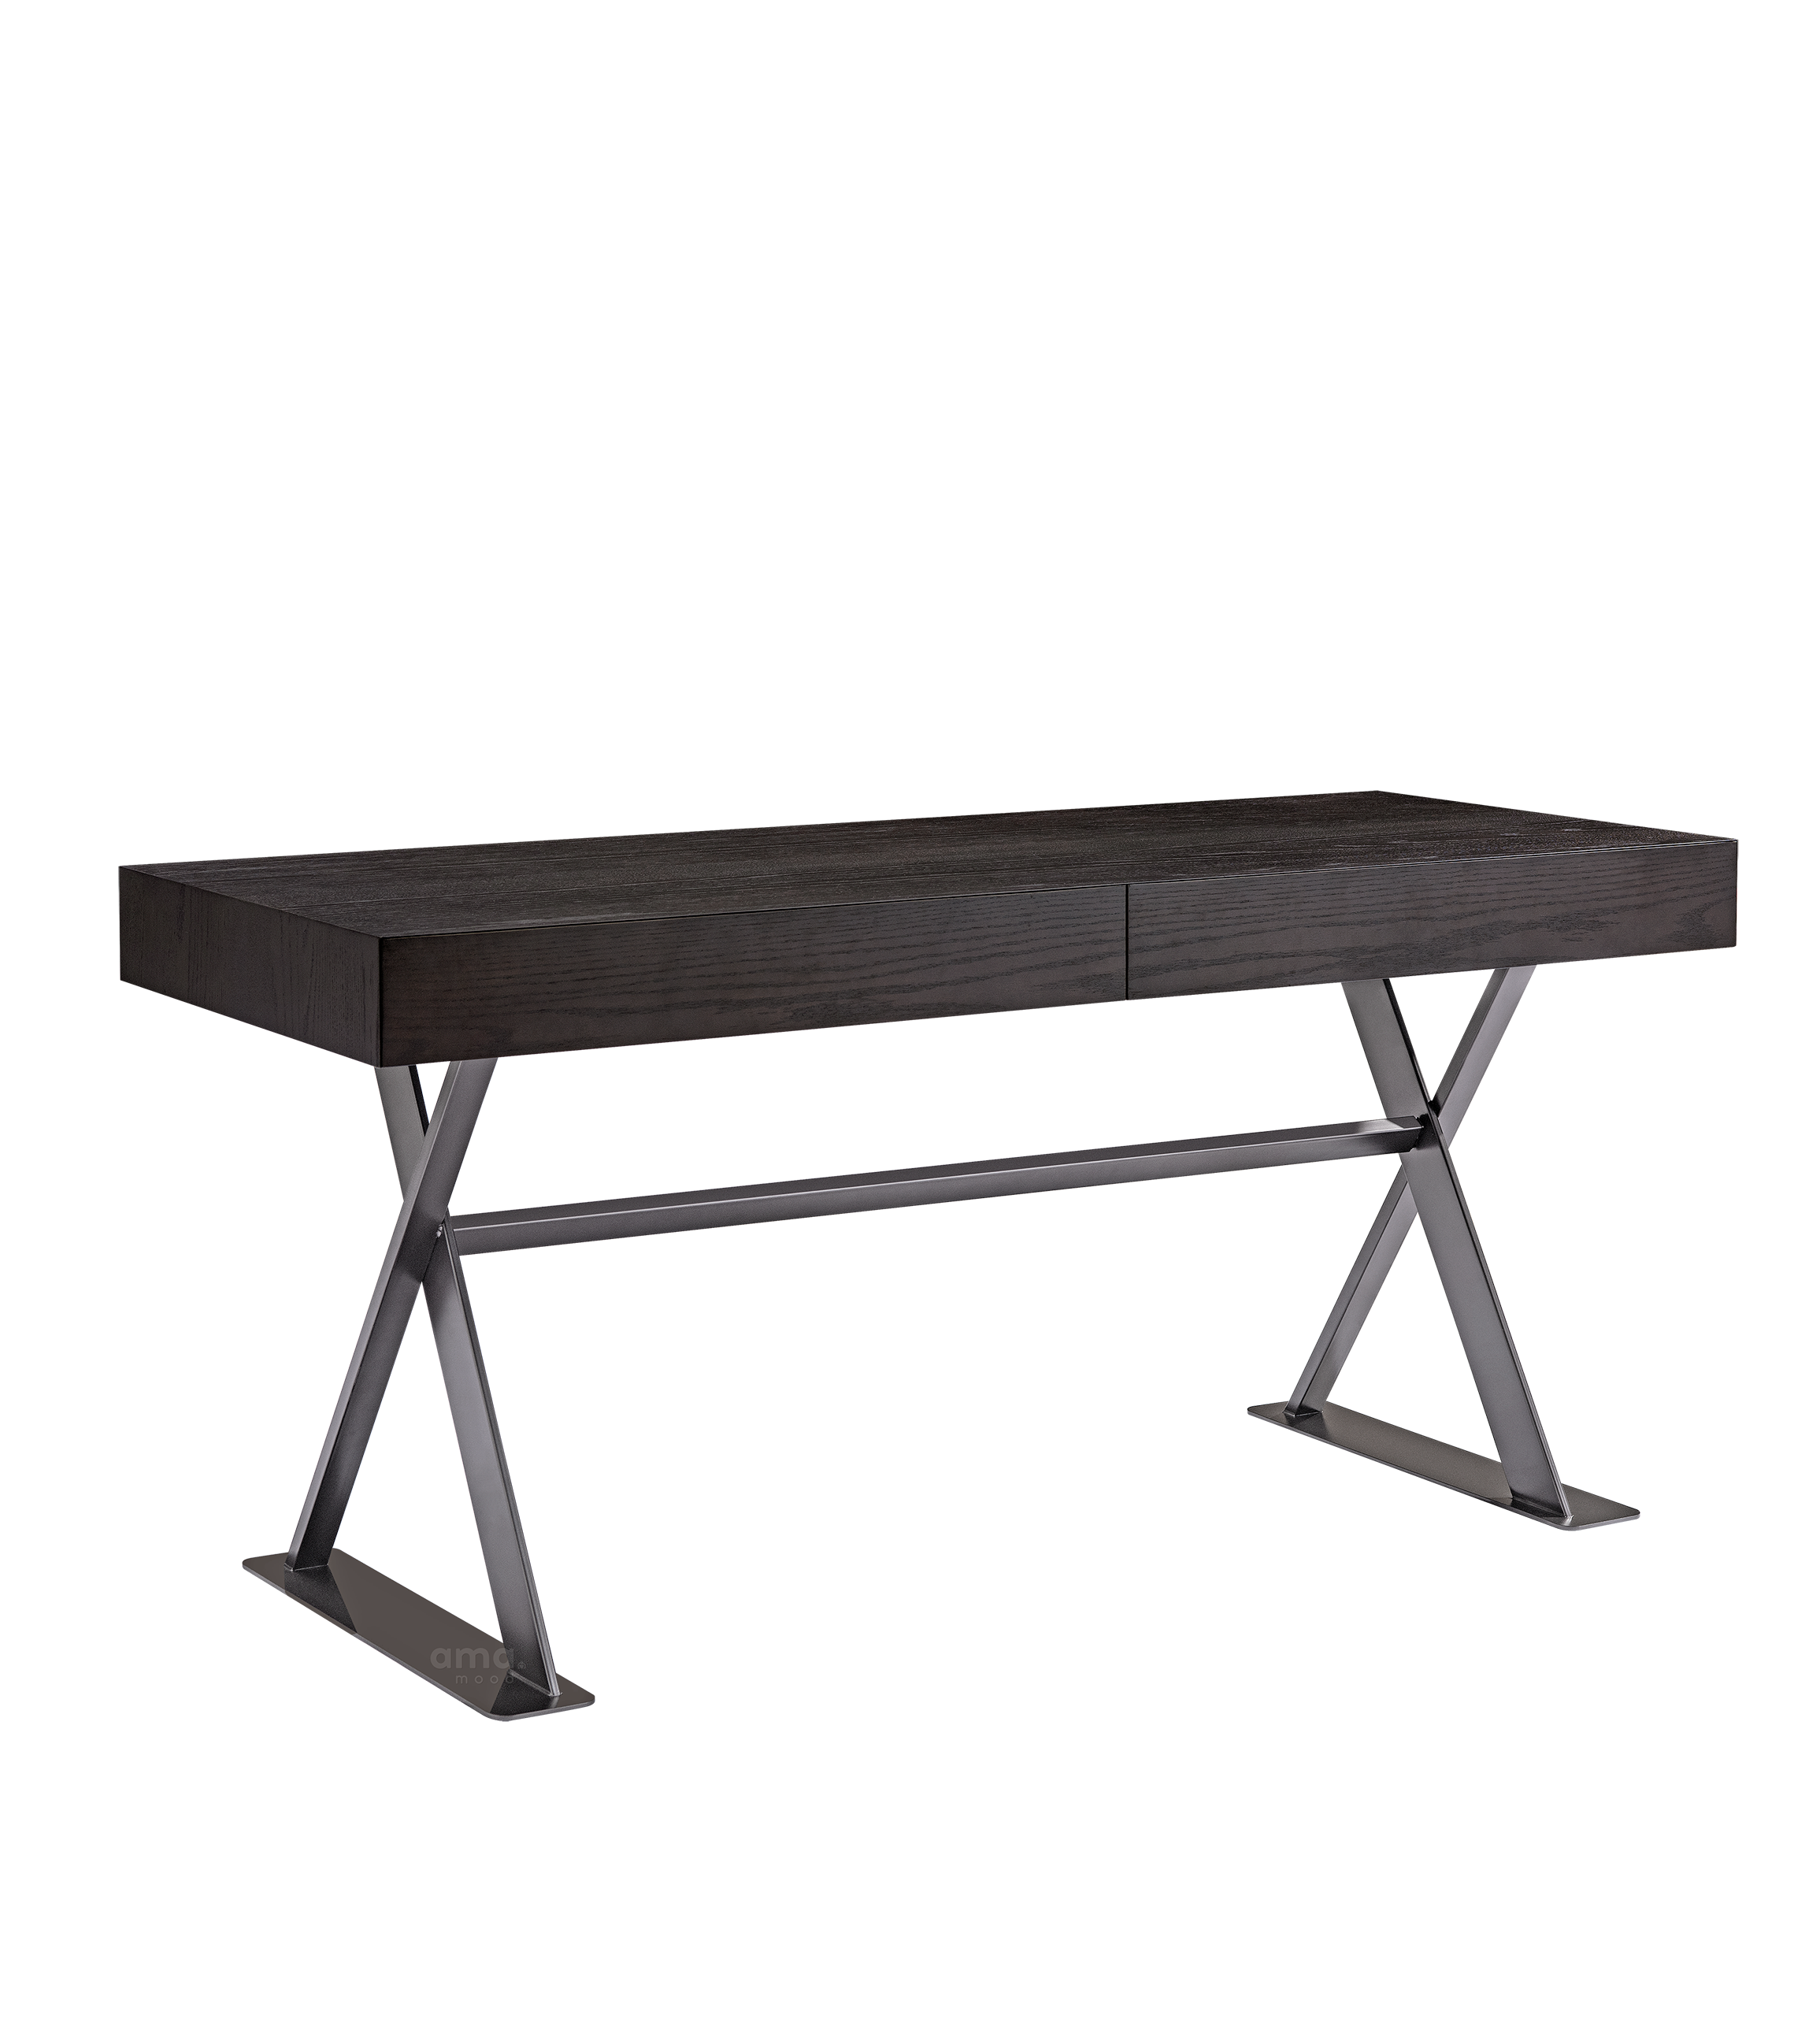 Custom-made Dresser Desk | Dresser Desk Production